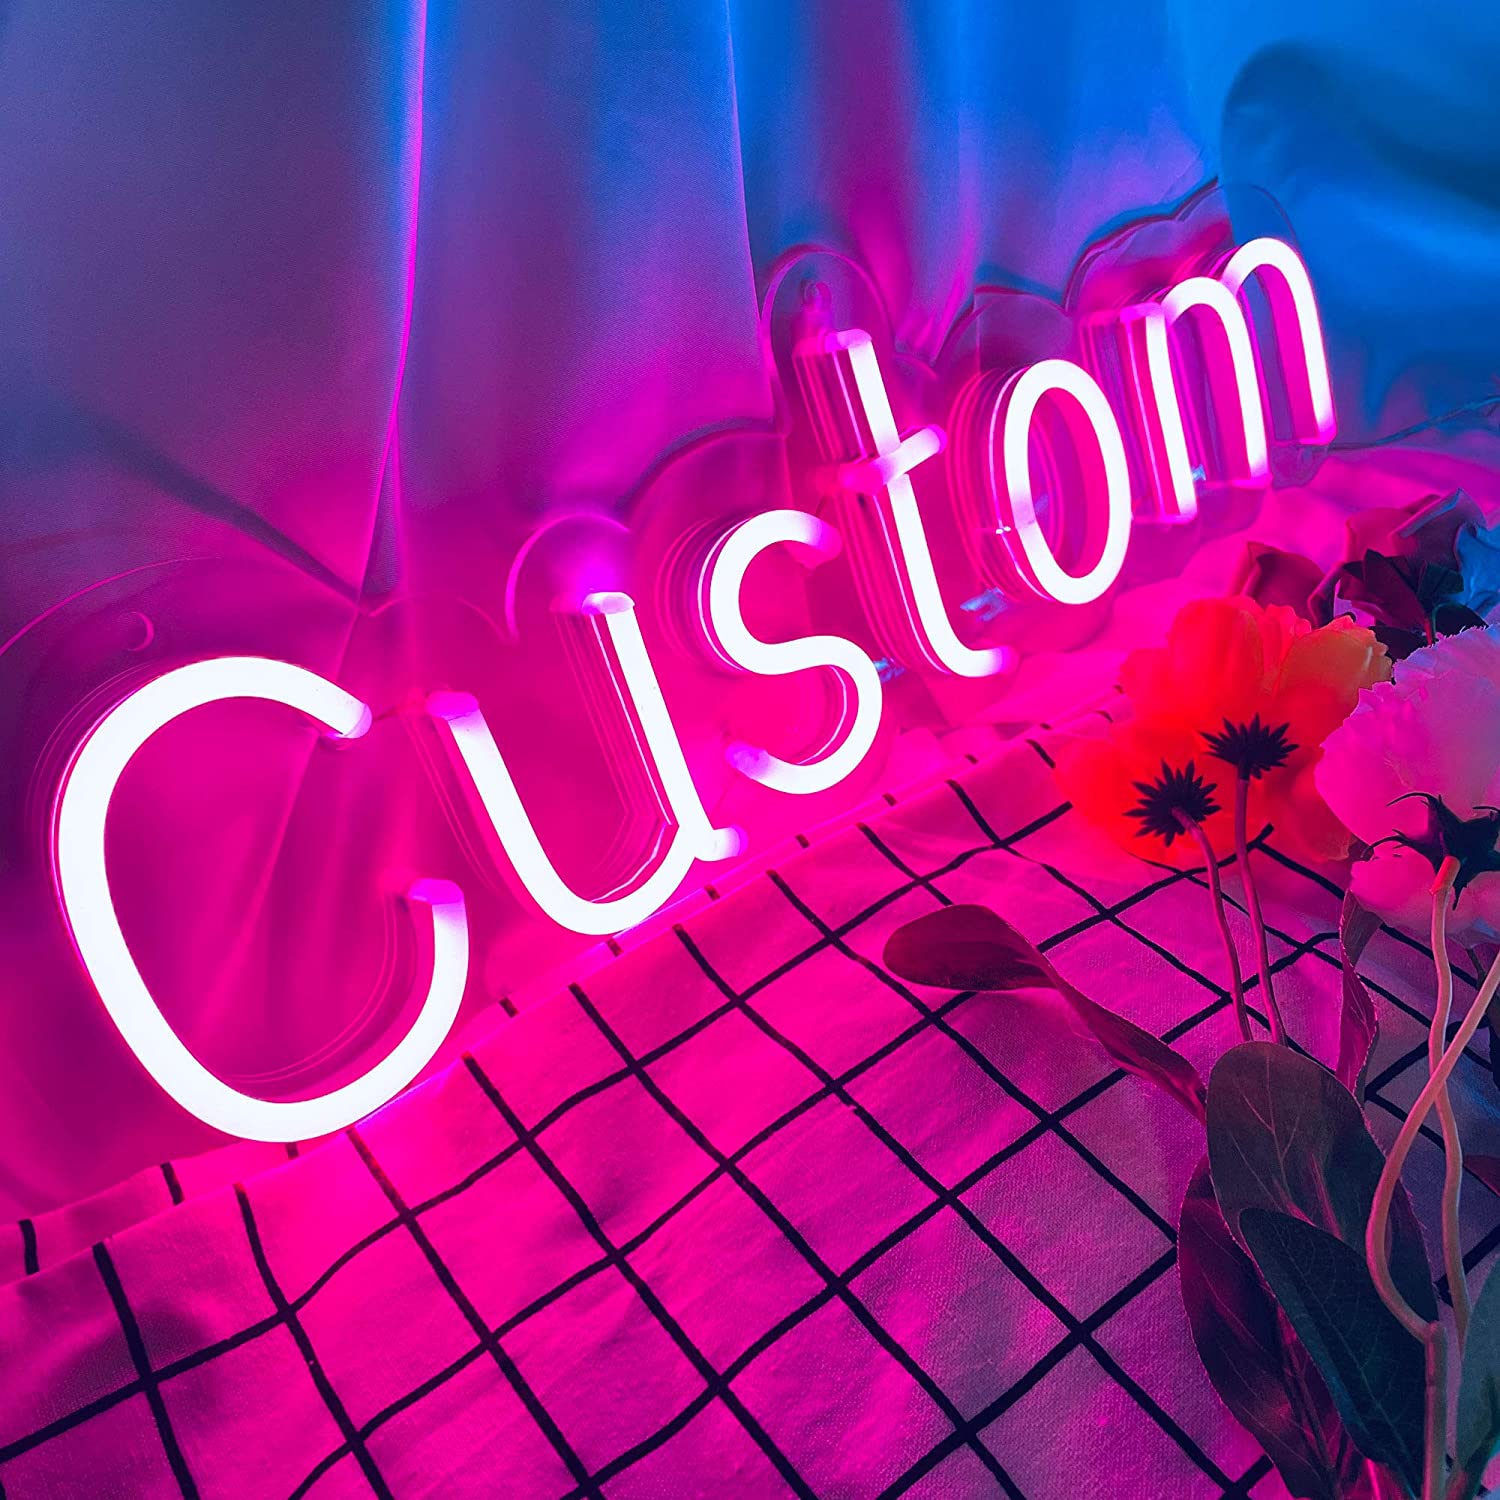 selicor neon sign custom for wedding and home